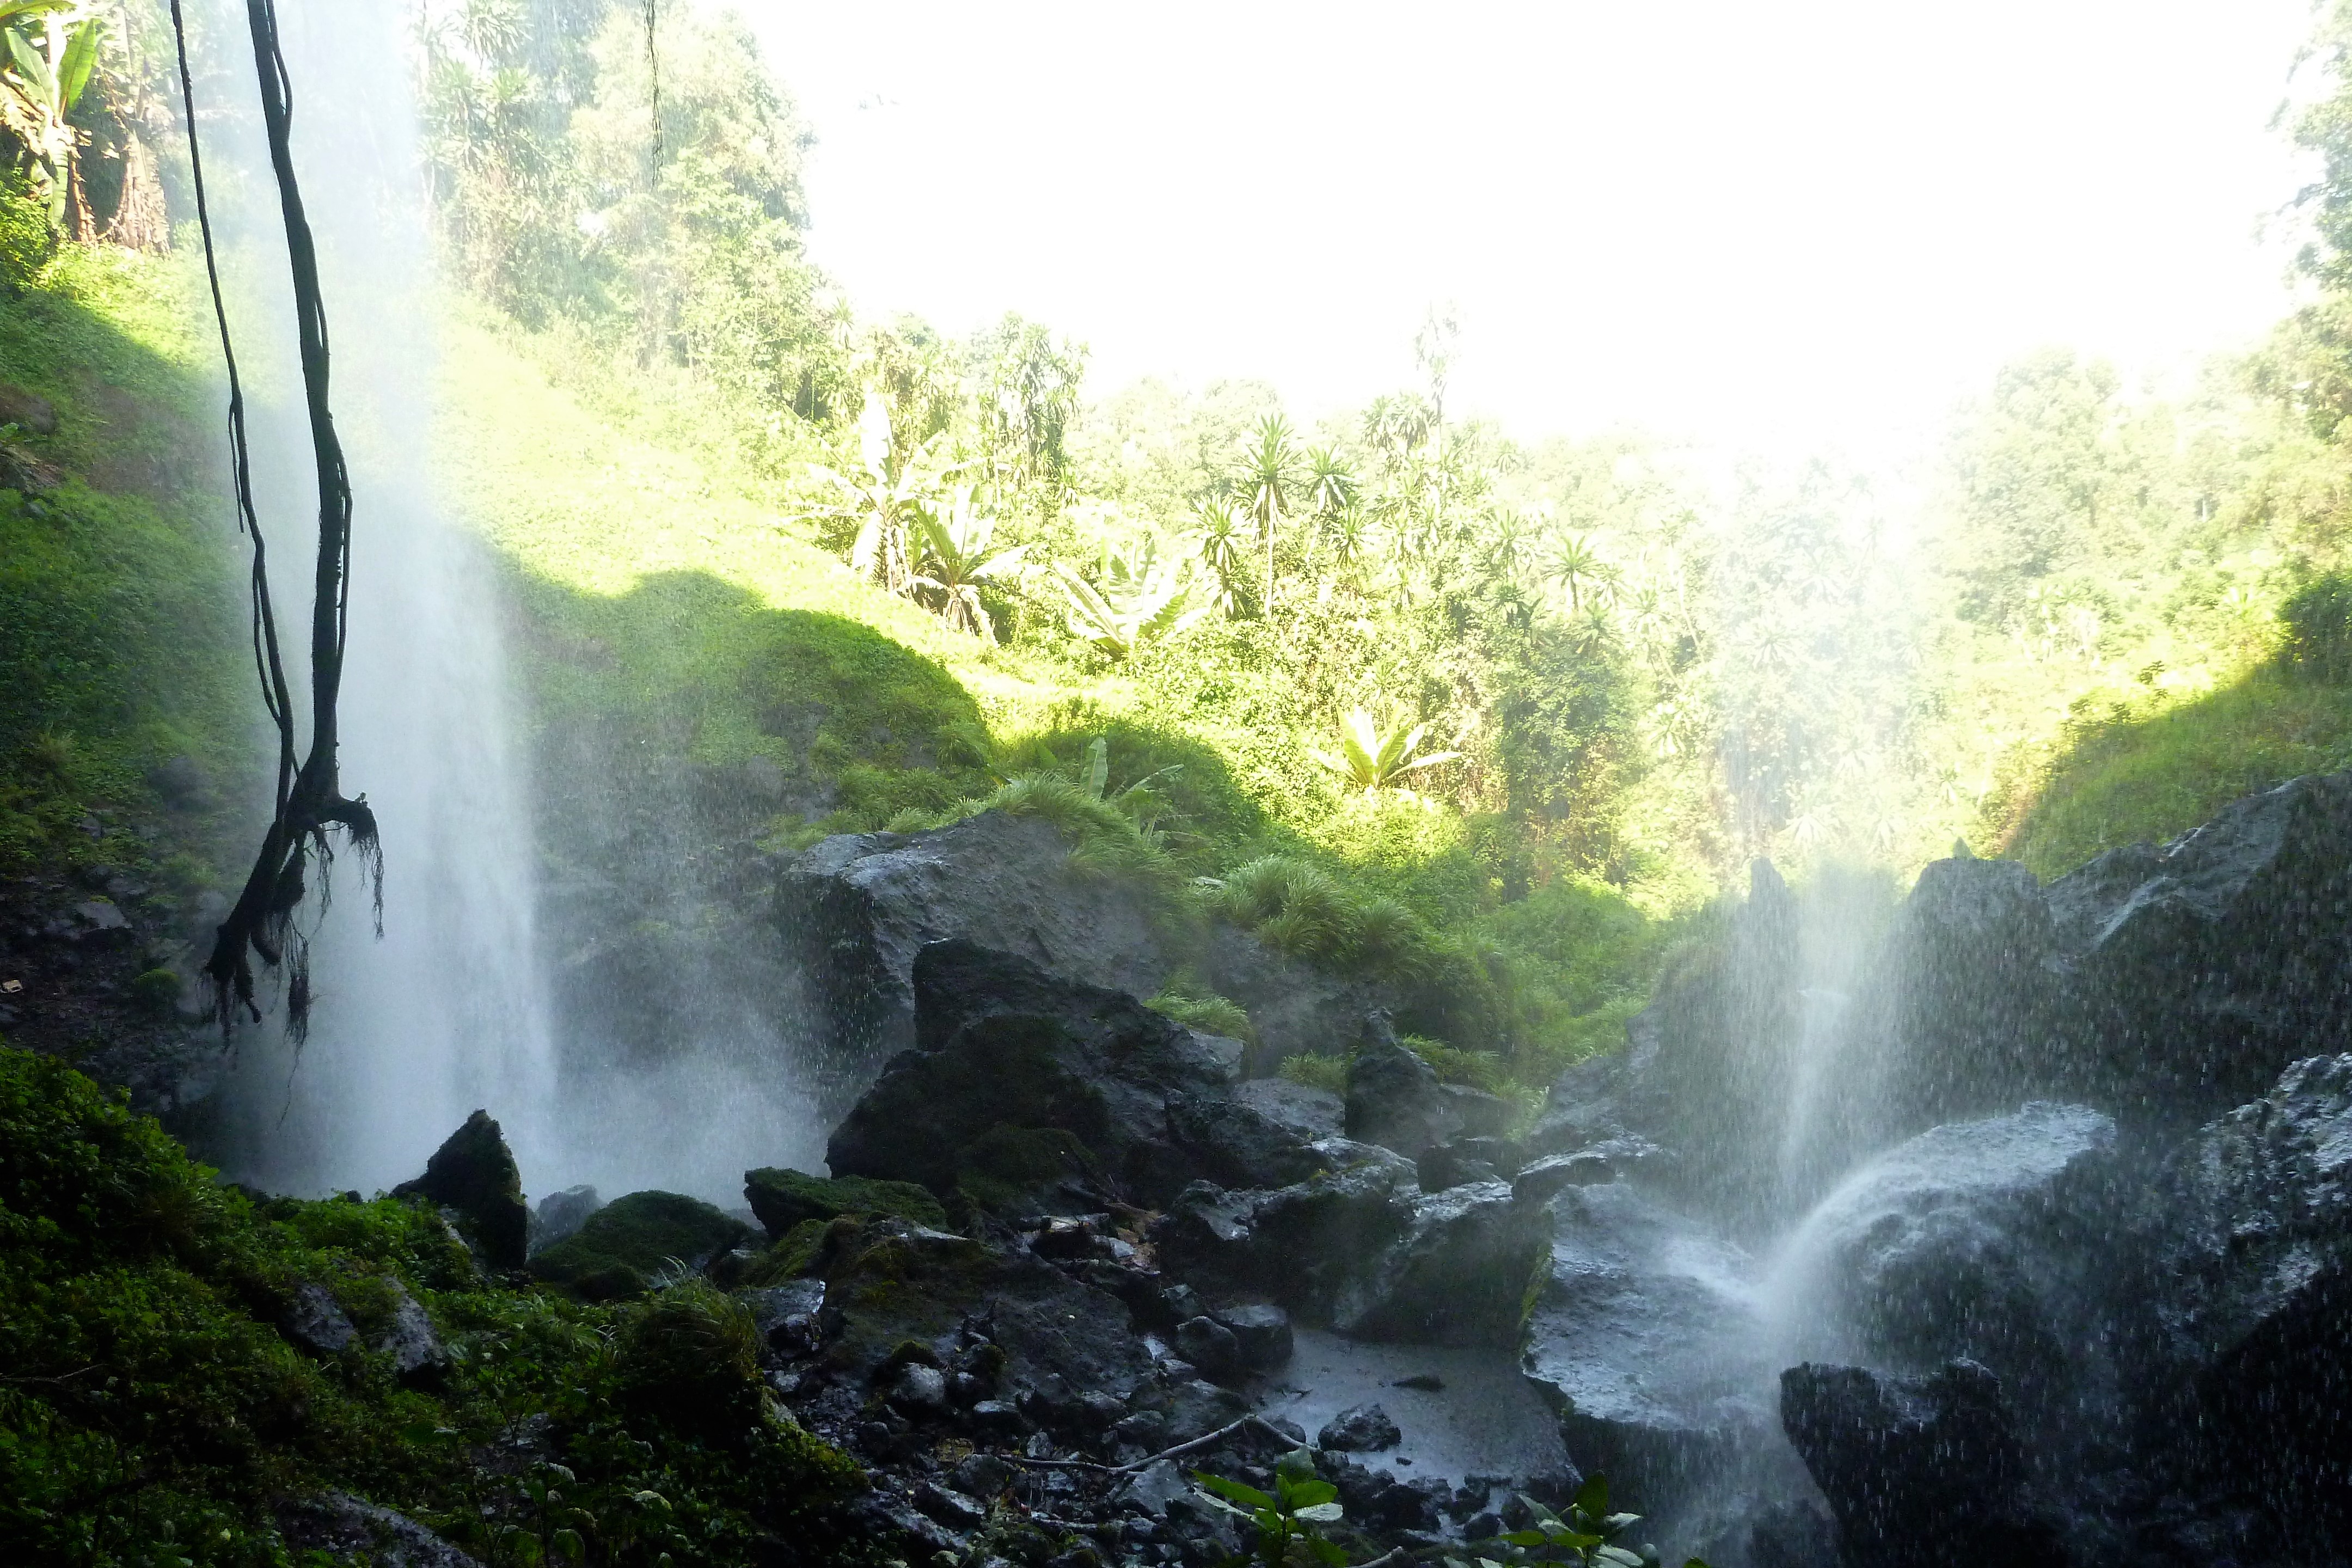 1 Day Sipi Falls Tour - Sipi Falls trails on Mount Elgon